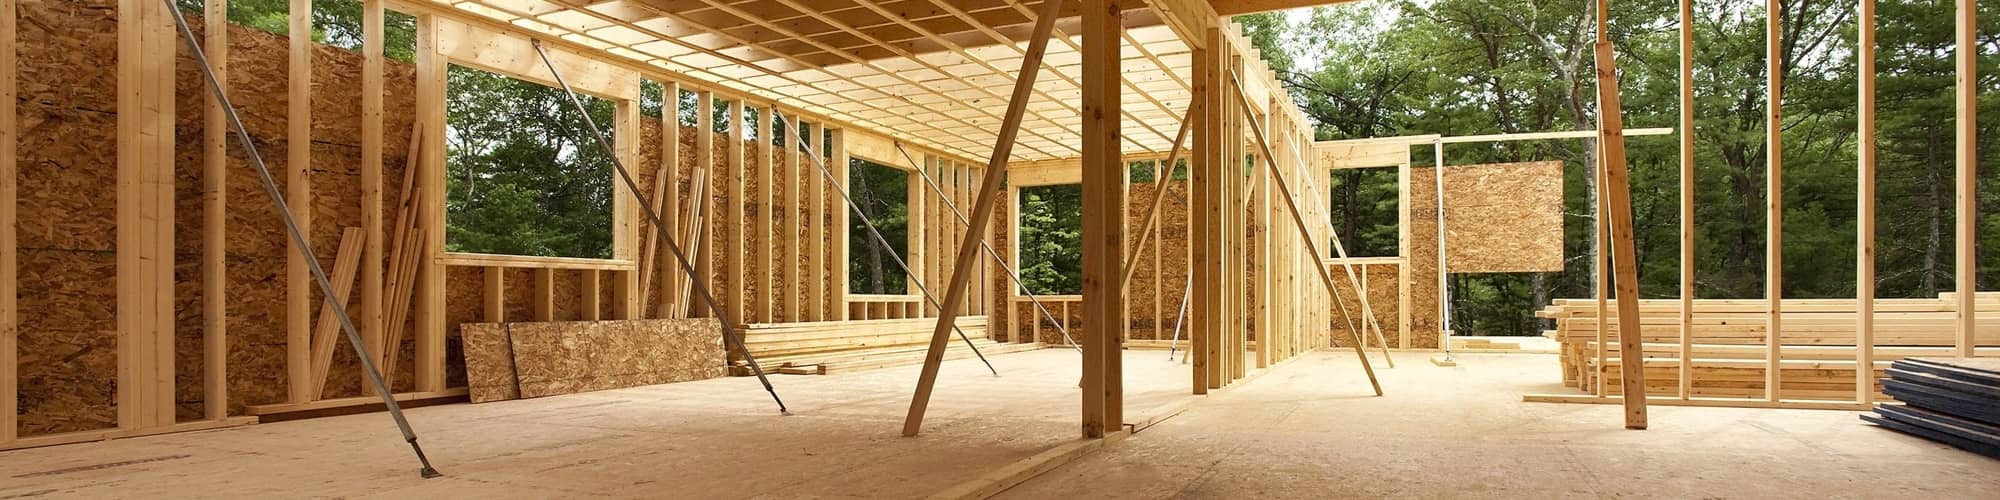 Seguros para casas de madera coberturas necesarias